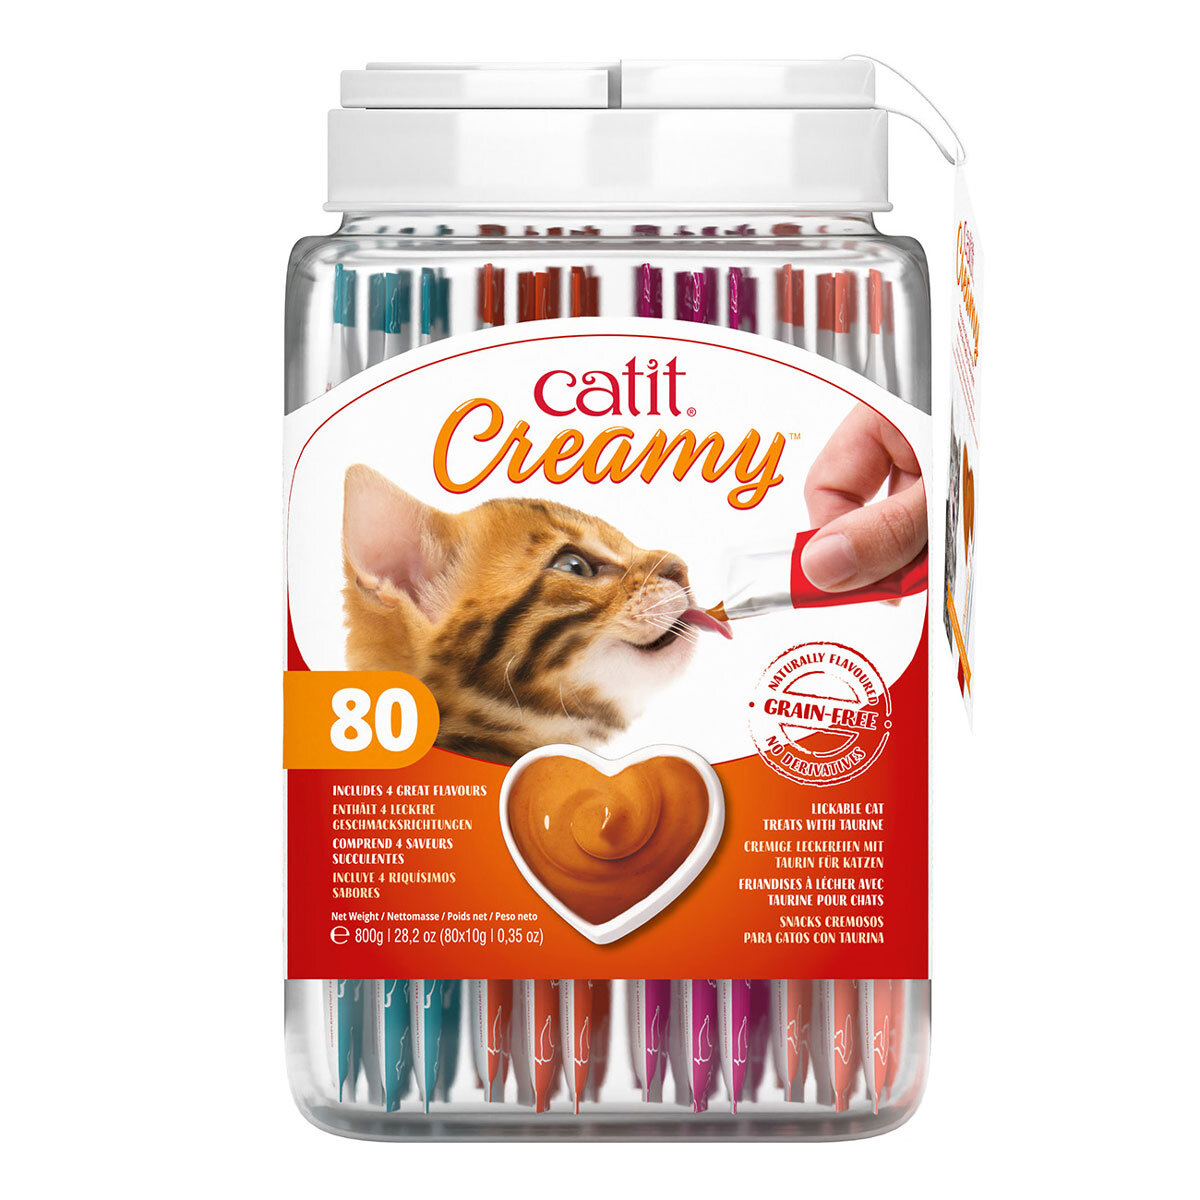 Catit Creamy Cat Treats Variety Jar, 80 x 10g